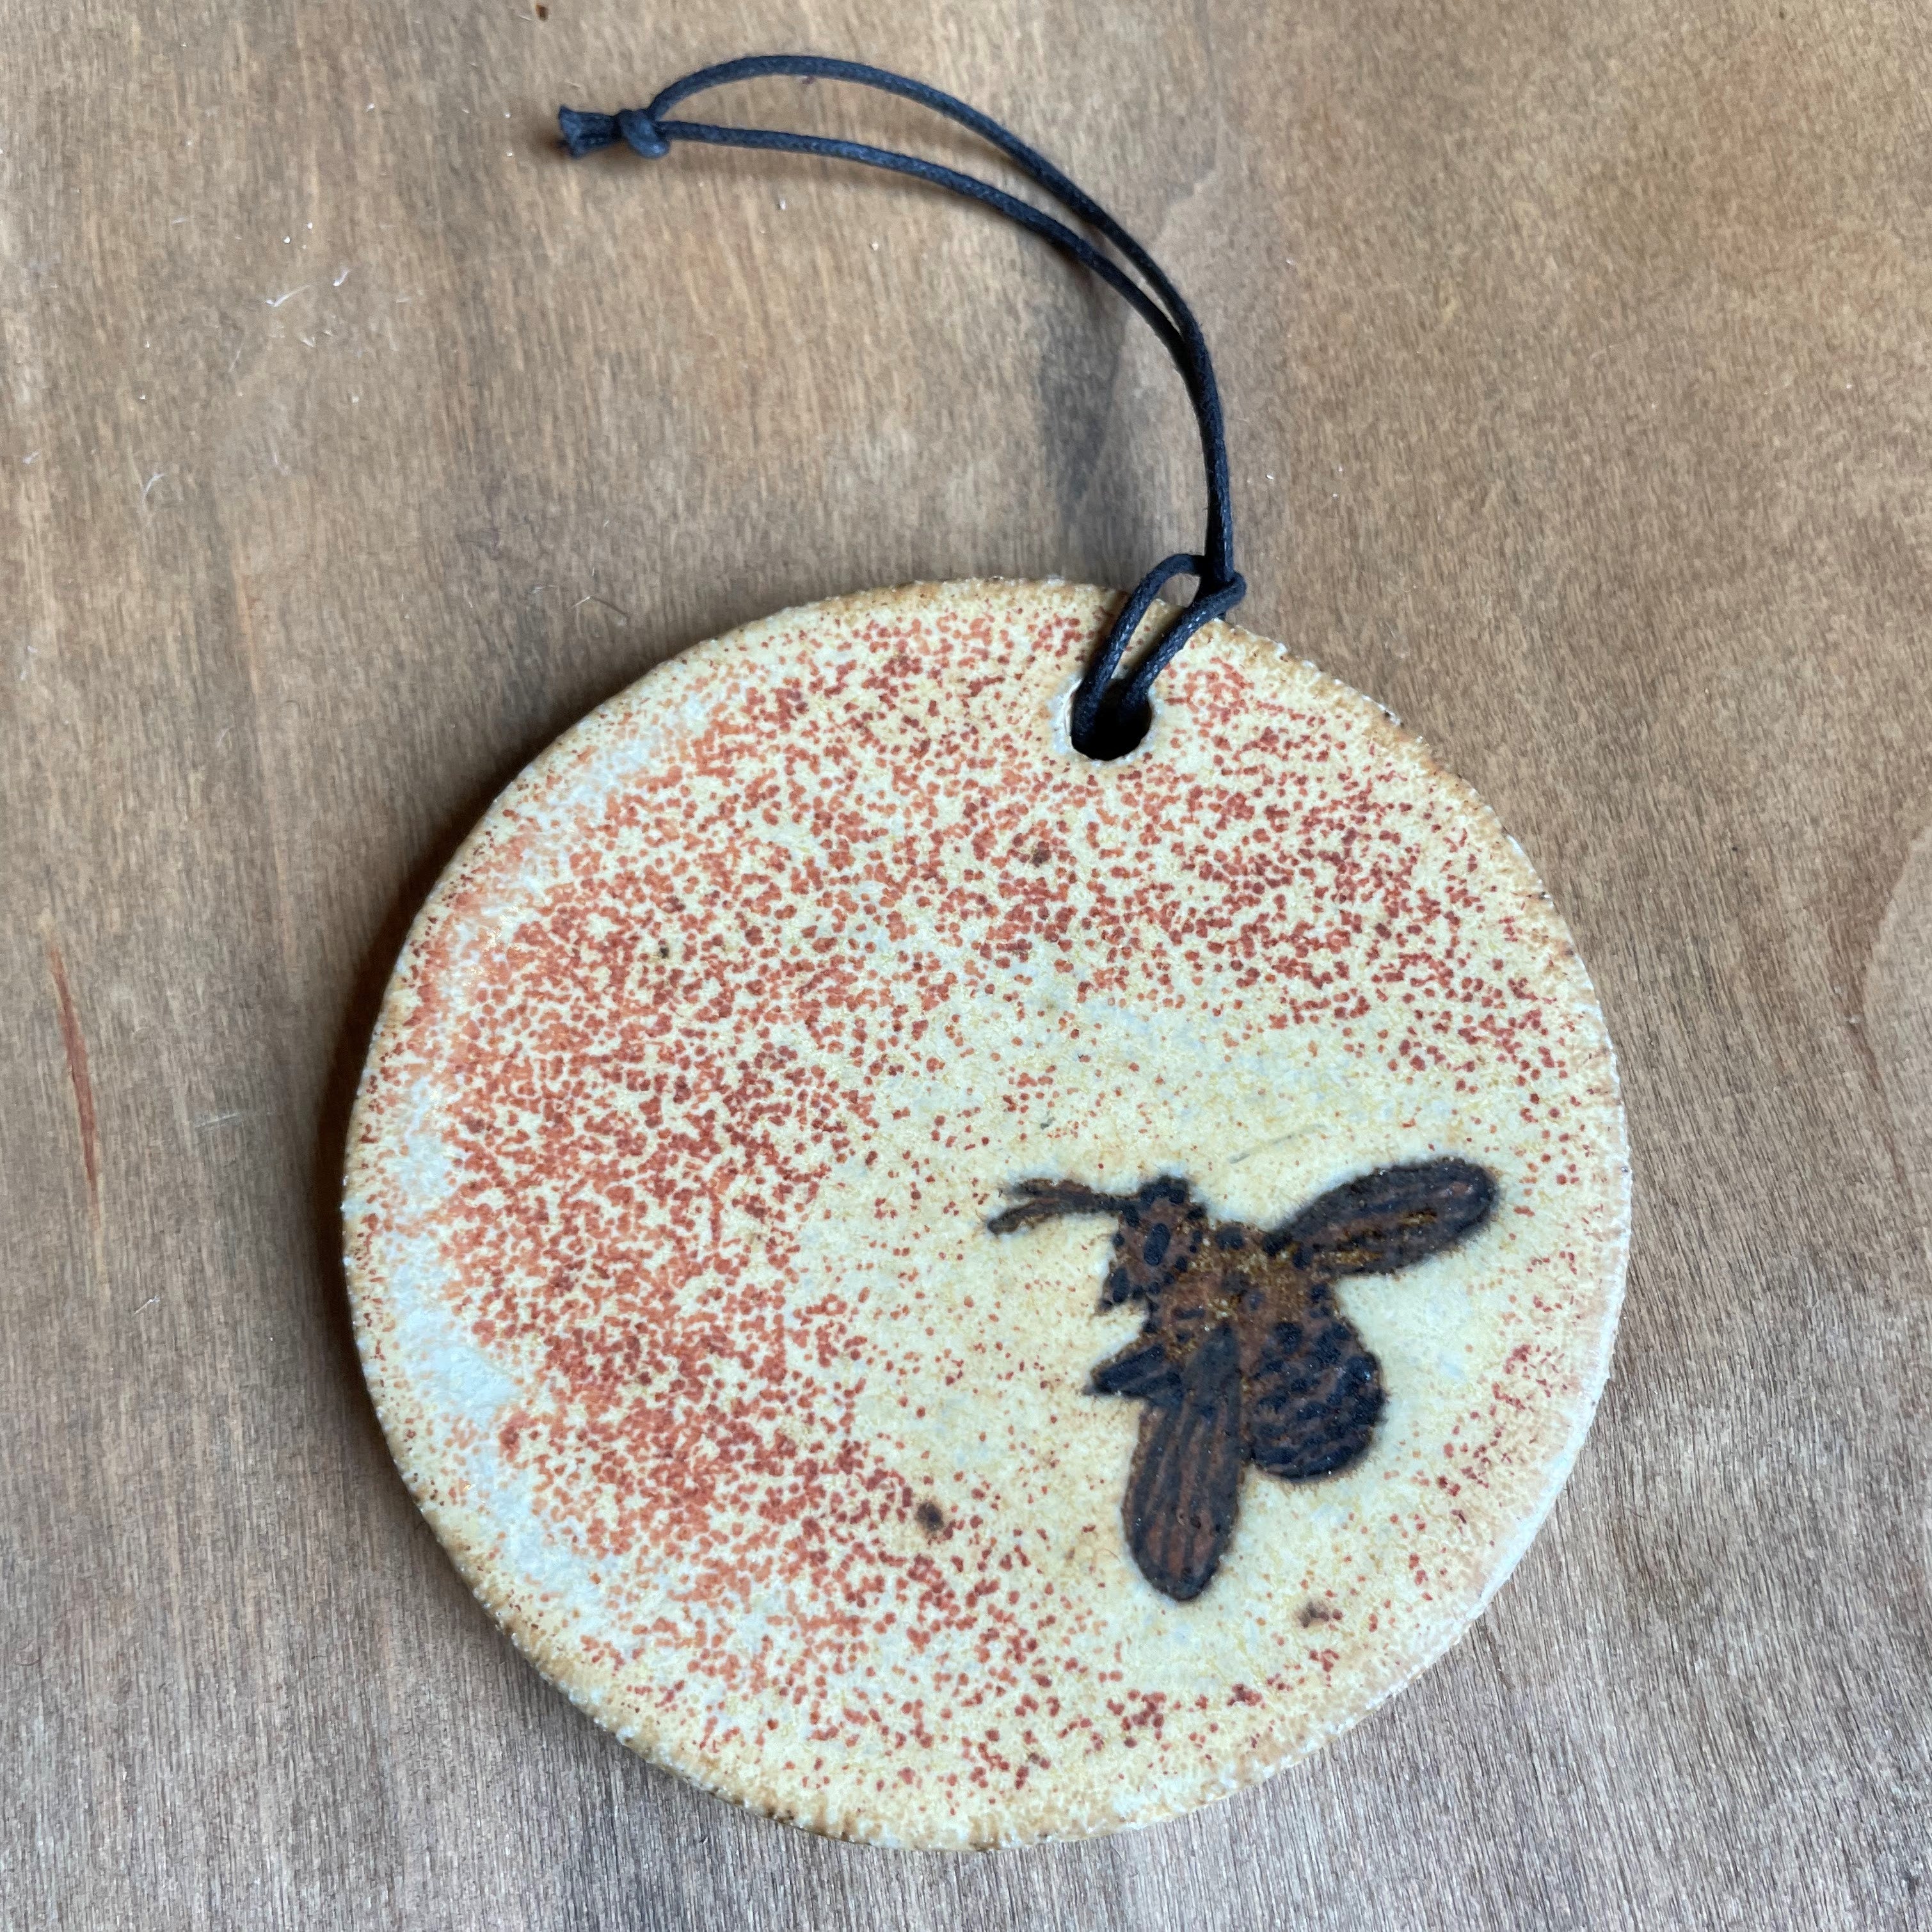 Bee Ceramic Ornament